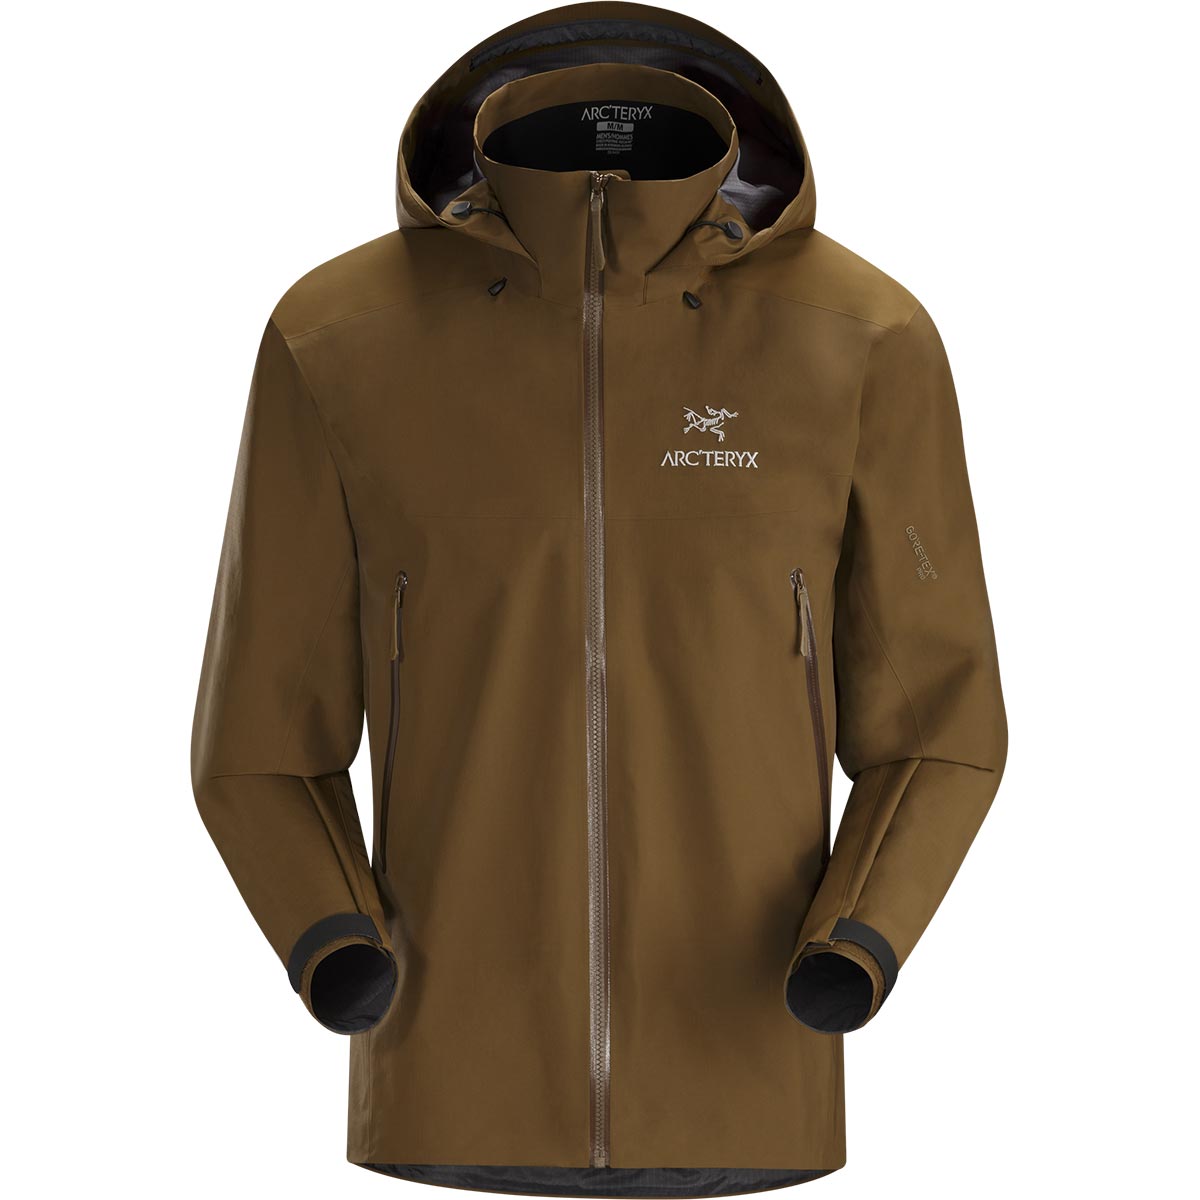 Arc'teryx Beta AR Jacket, men's, discontinued Spring 2019 colors (free ...